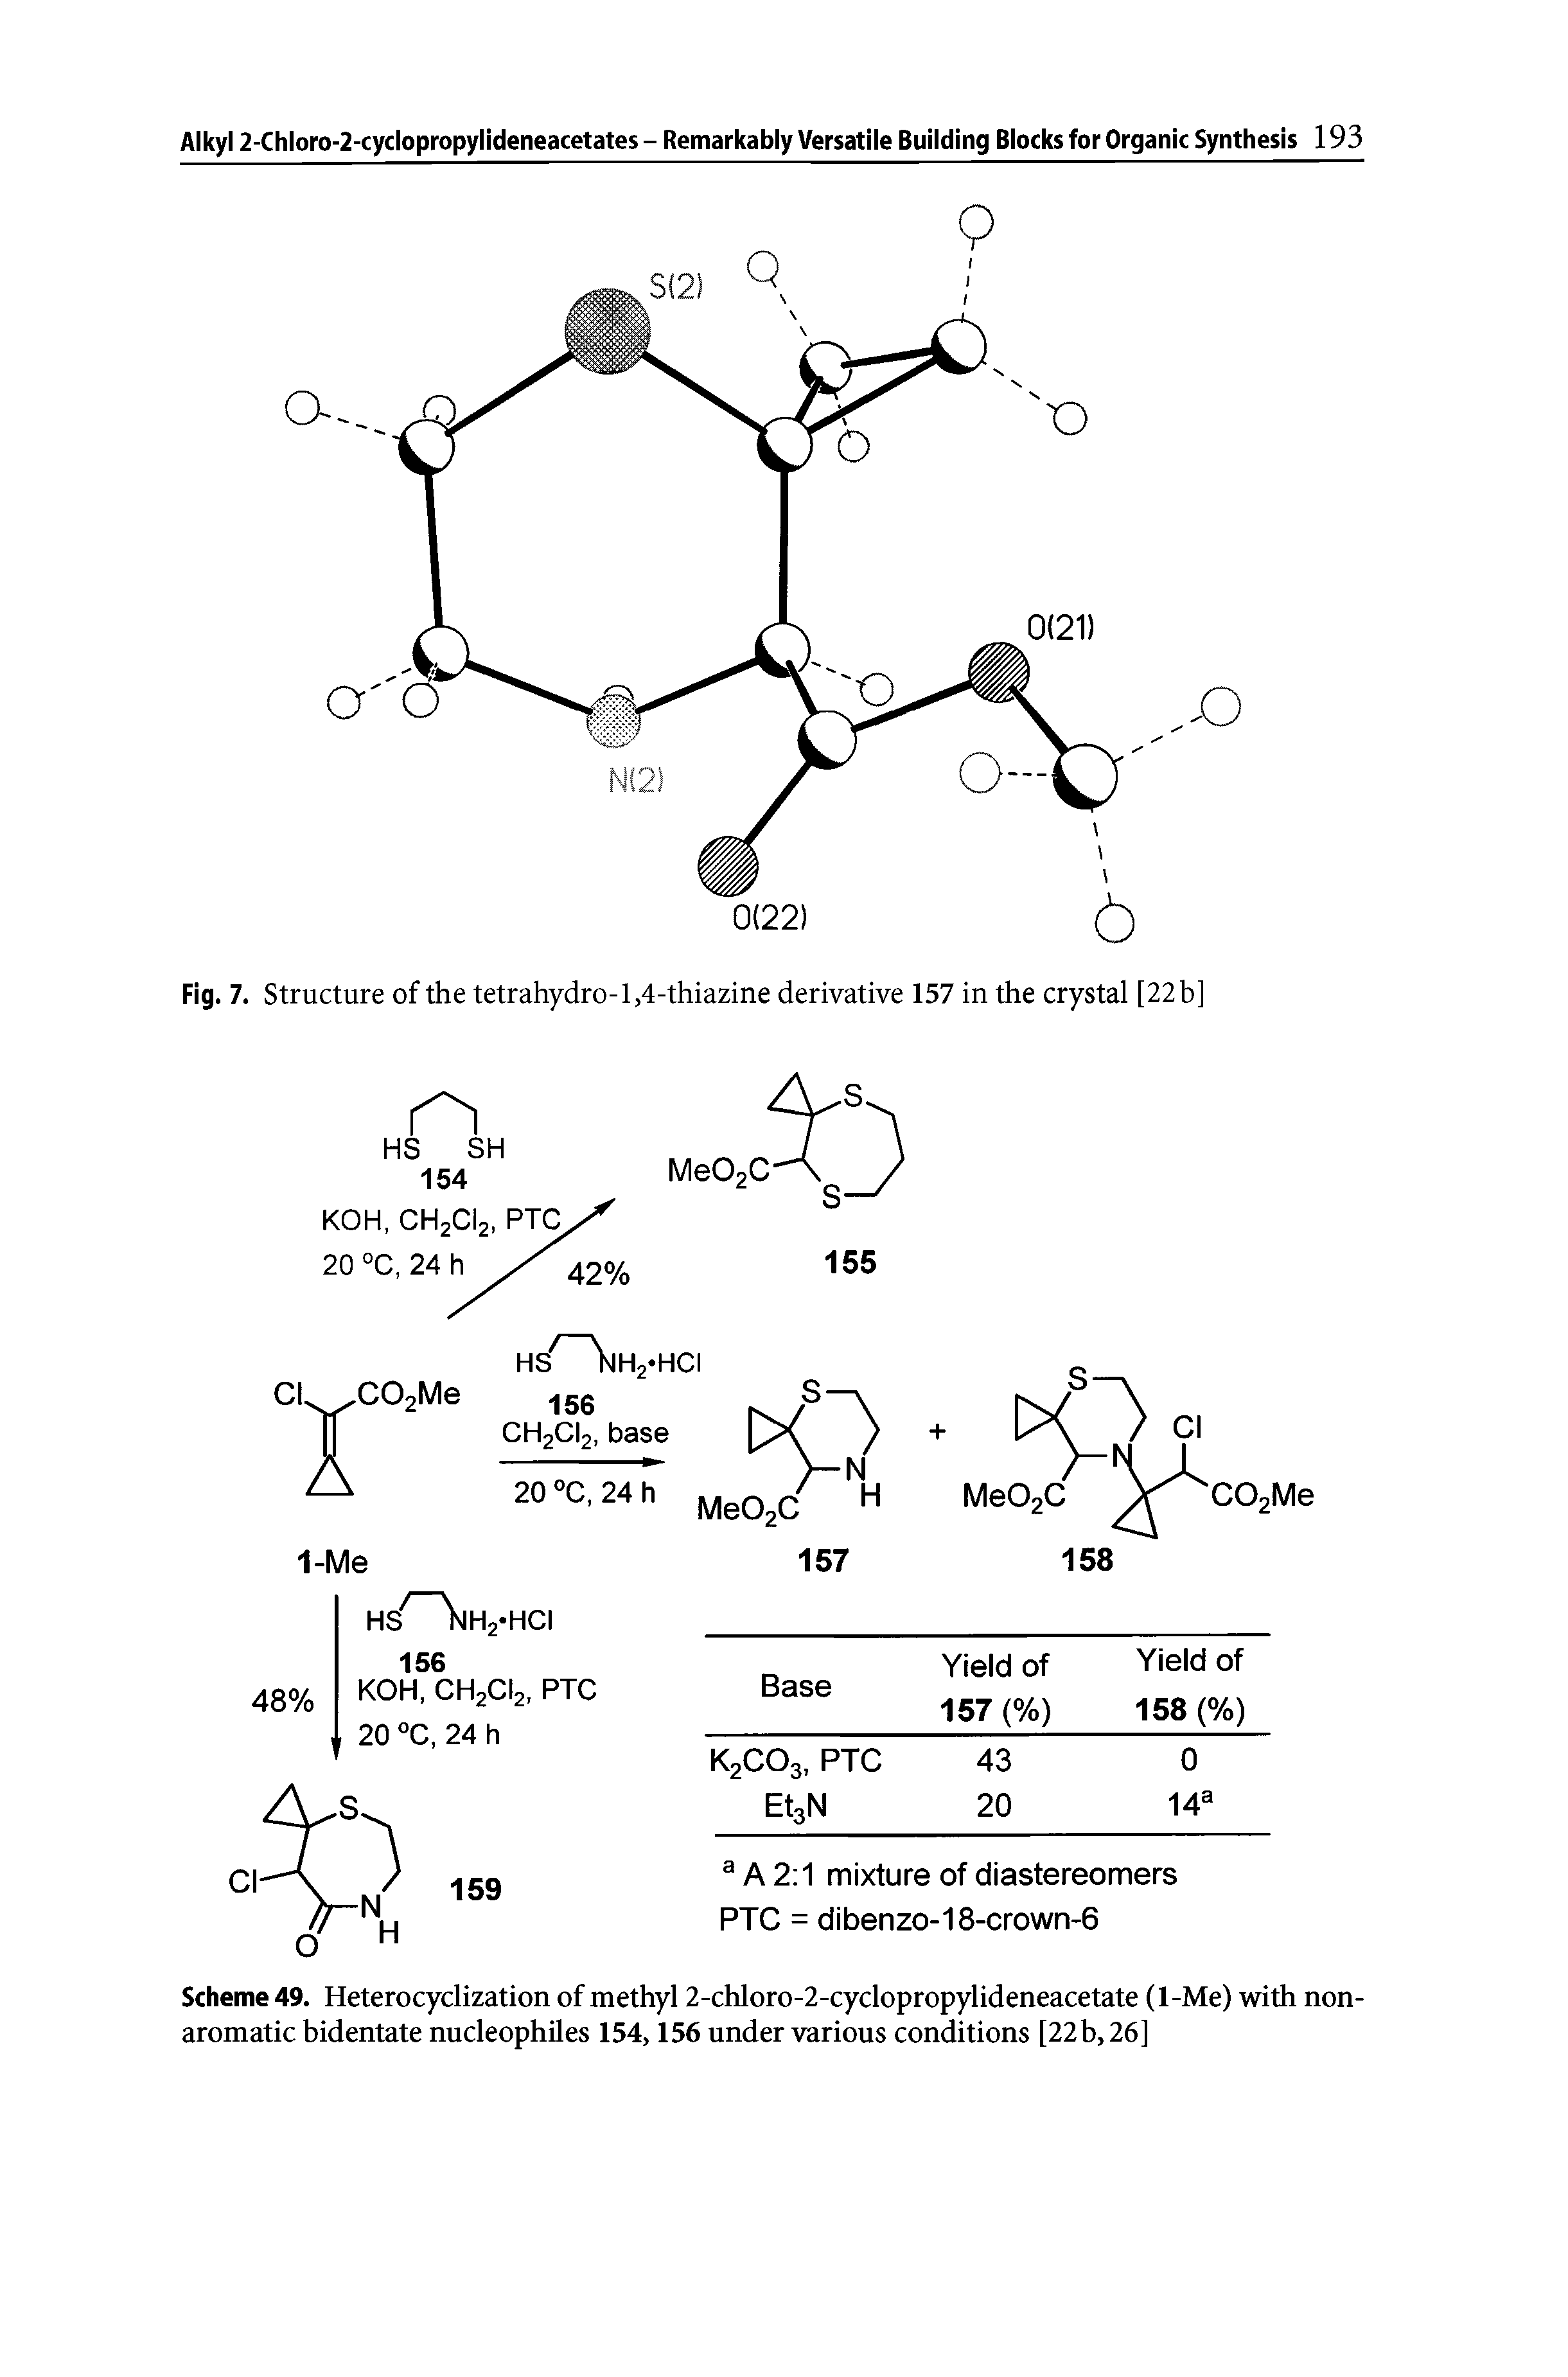 Scheme 49. Heterocyclization of methyl 2-chloro-2-cyclopropylideneacetate (1-Me) with nonaromatic bidentate nucleophiles 154,156 under various conditions [22b, 26]...